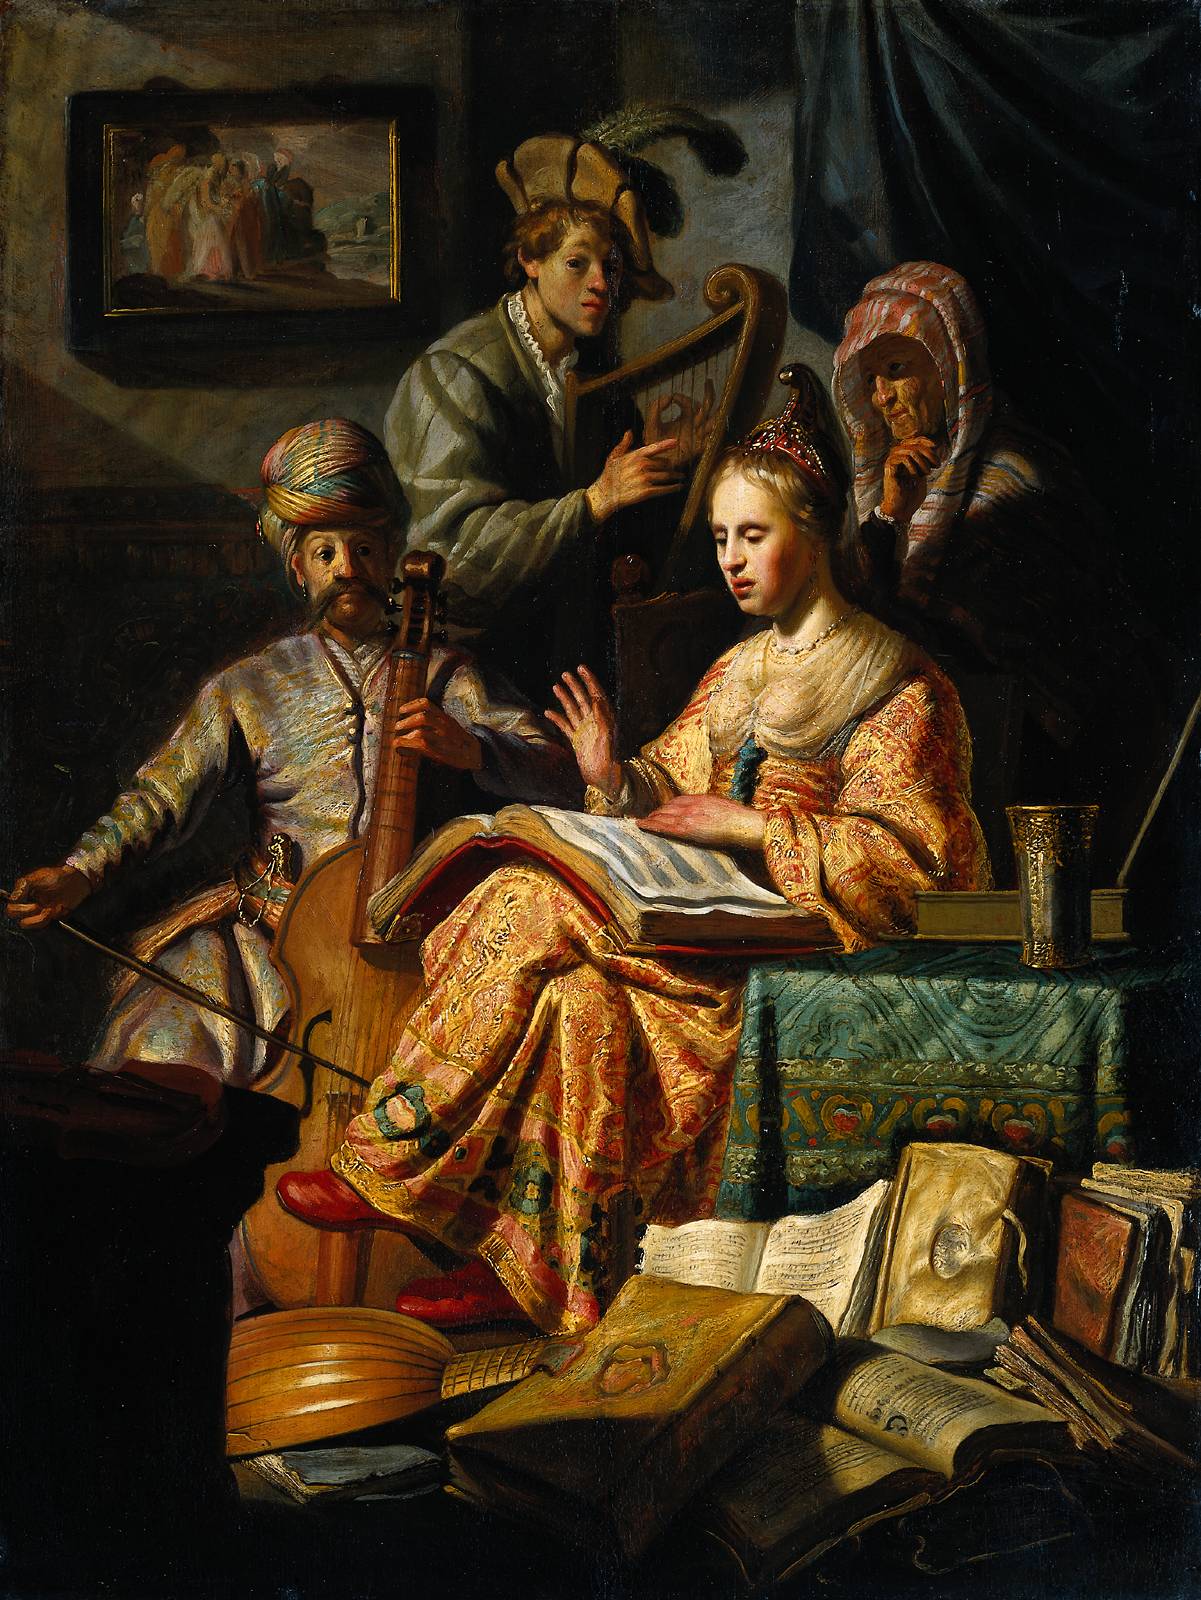 Troupe Musicale by Rembrandt van Rijn - 1626/1626 